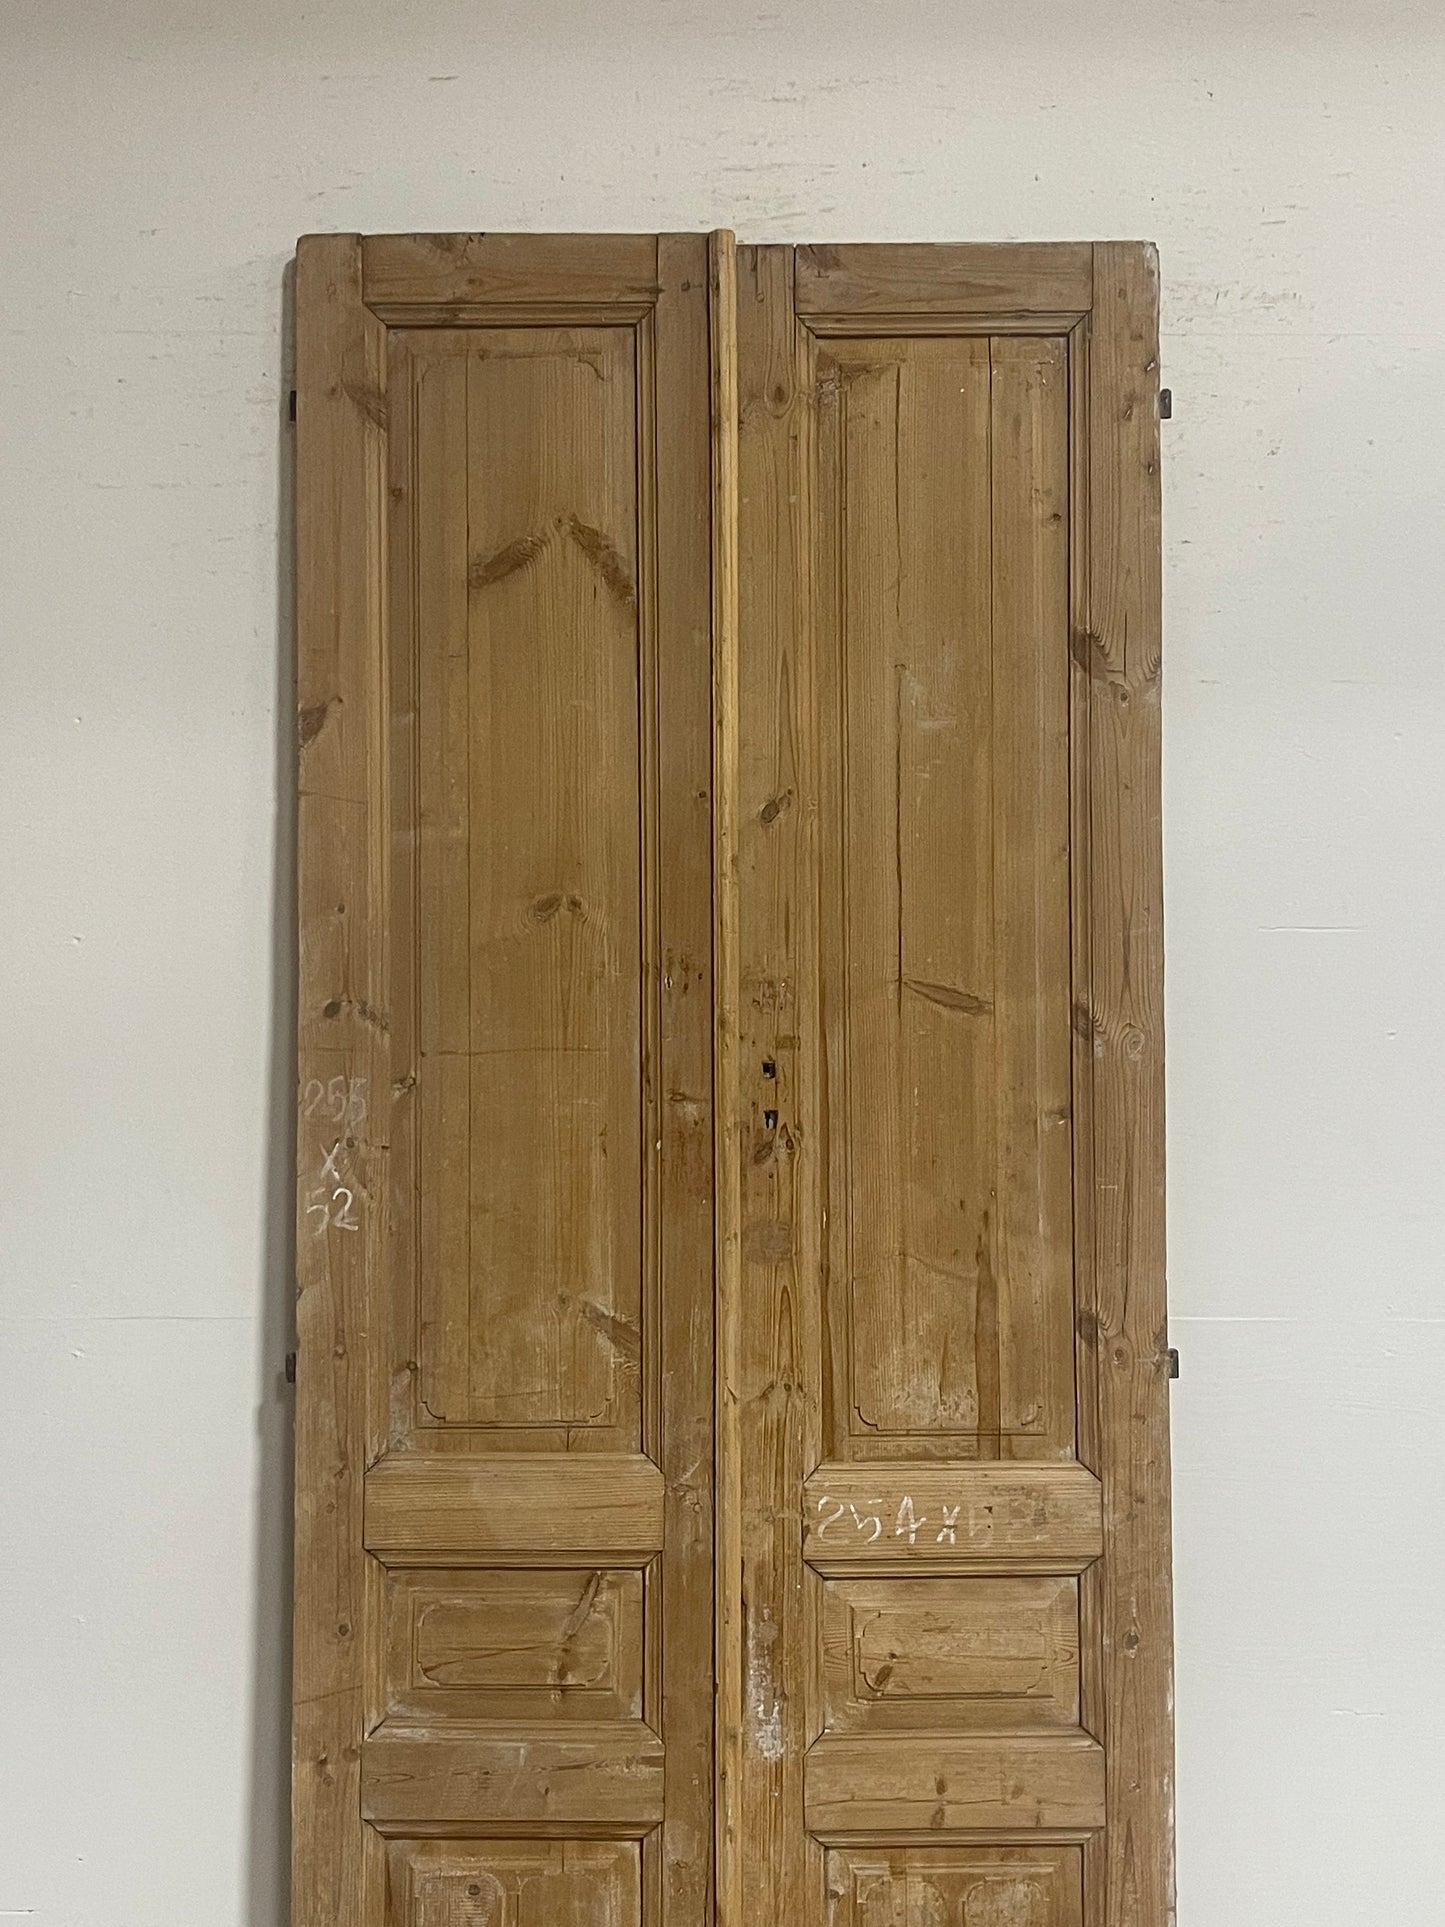 Antique French panel doors (100x41) G0151s